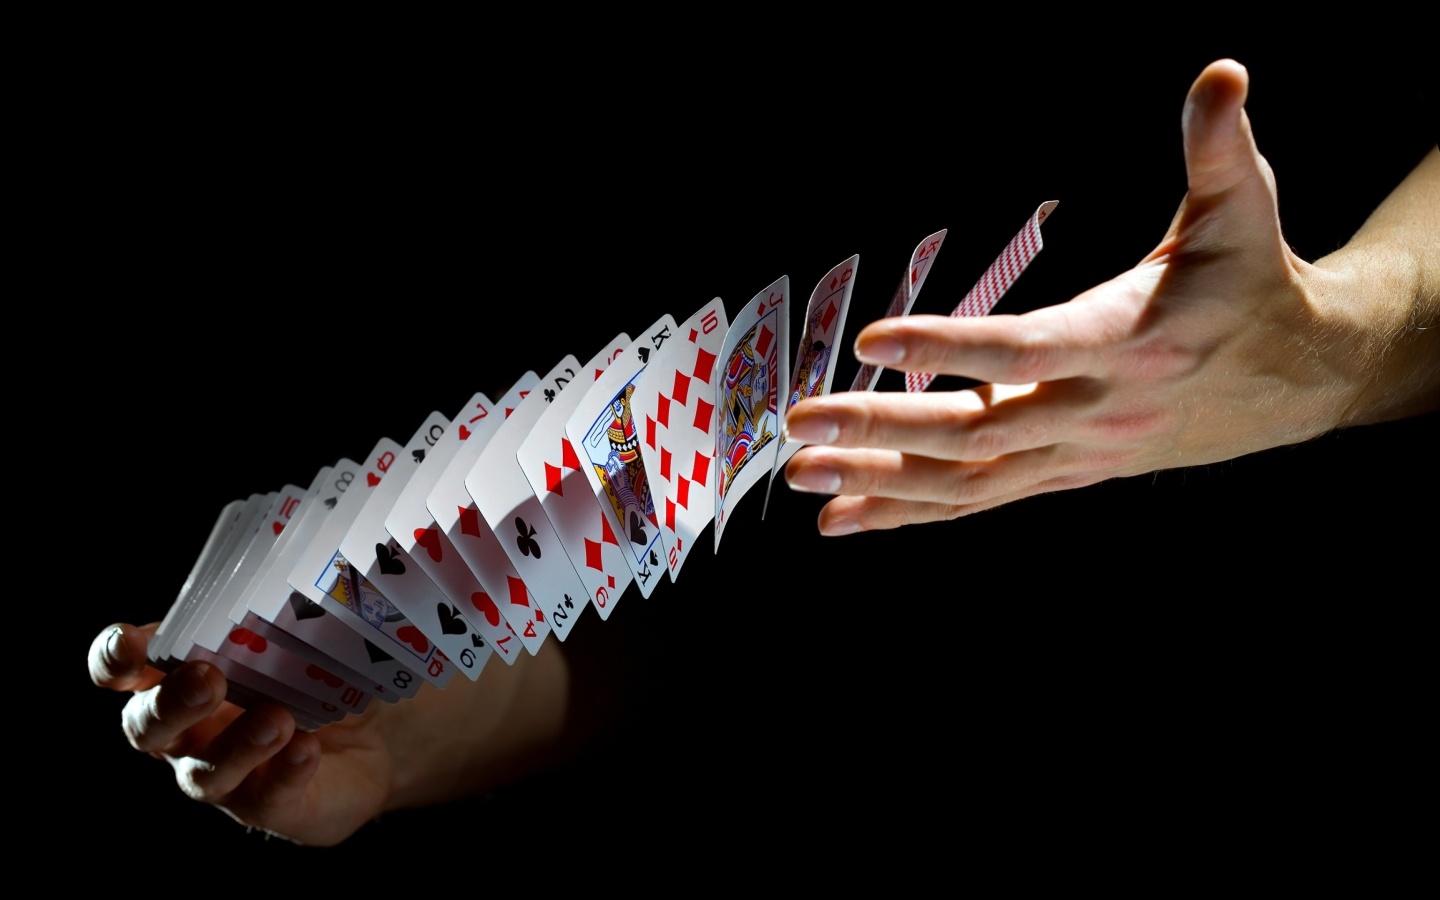 Das Playing cards trick Wallpaper 1440x900